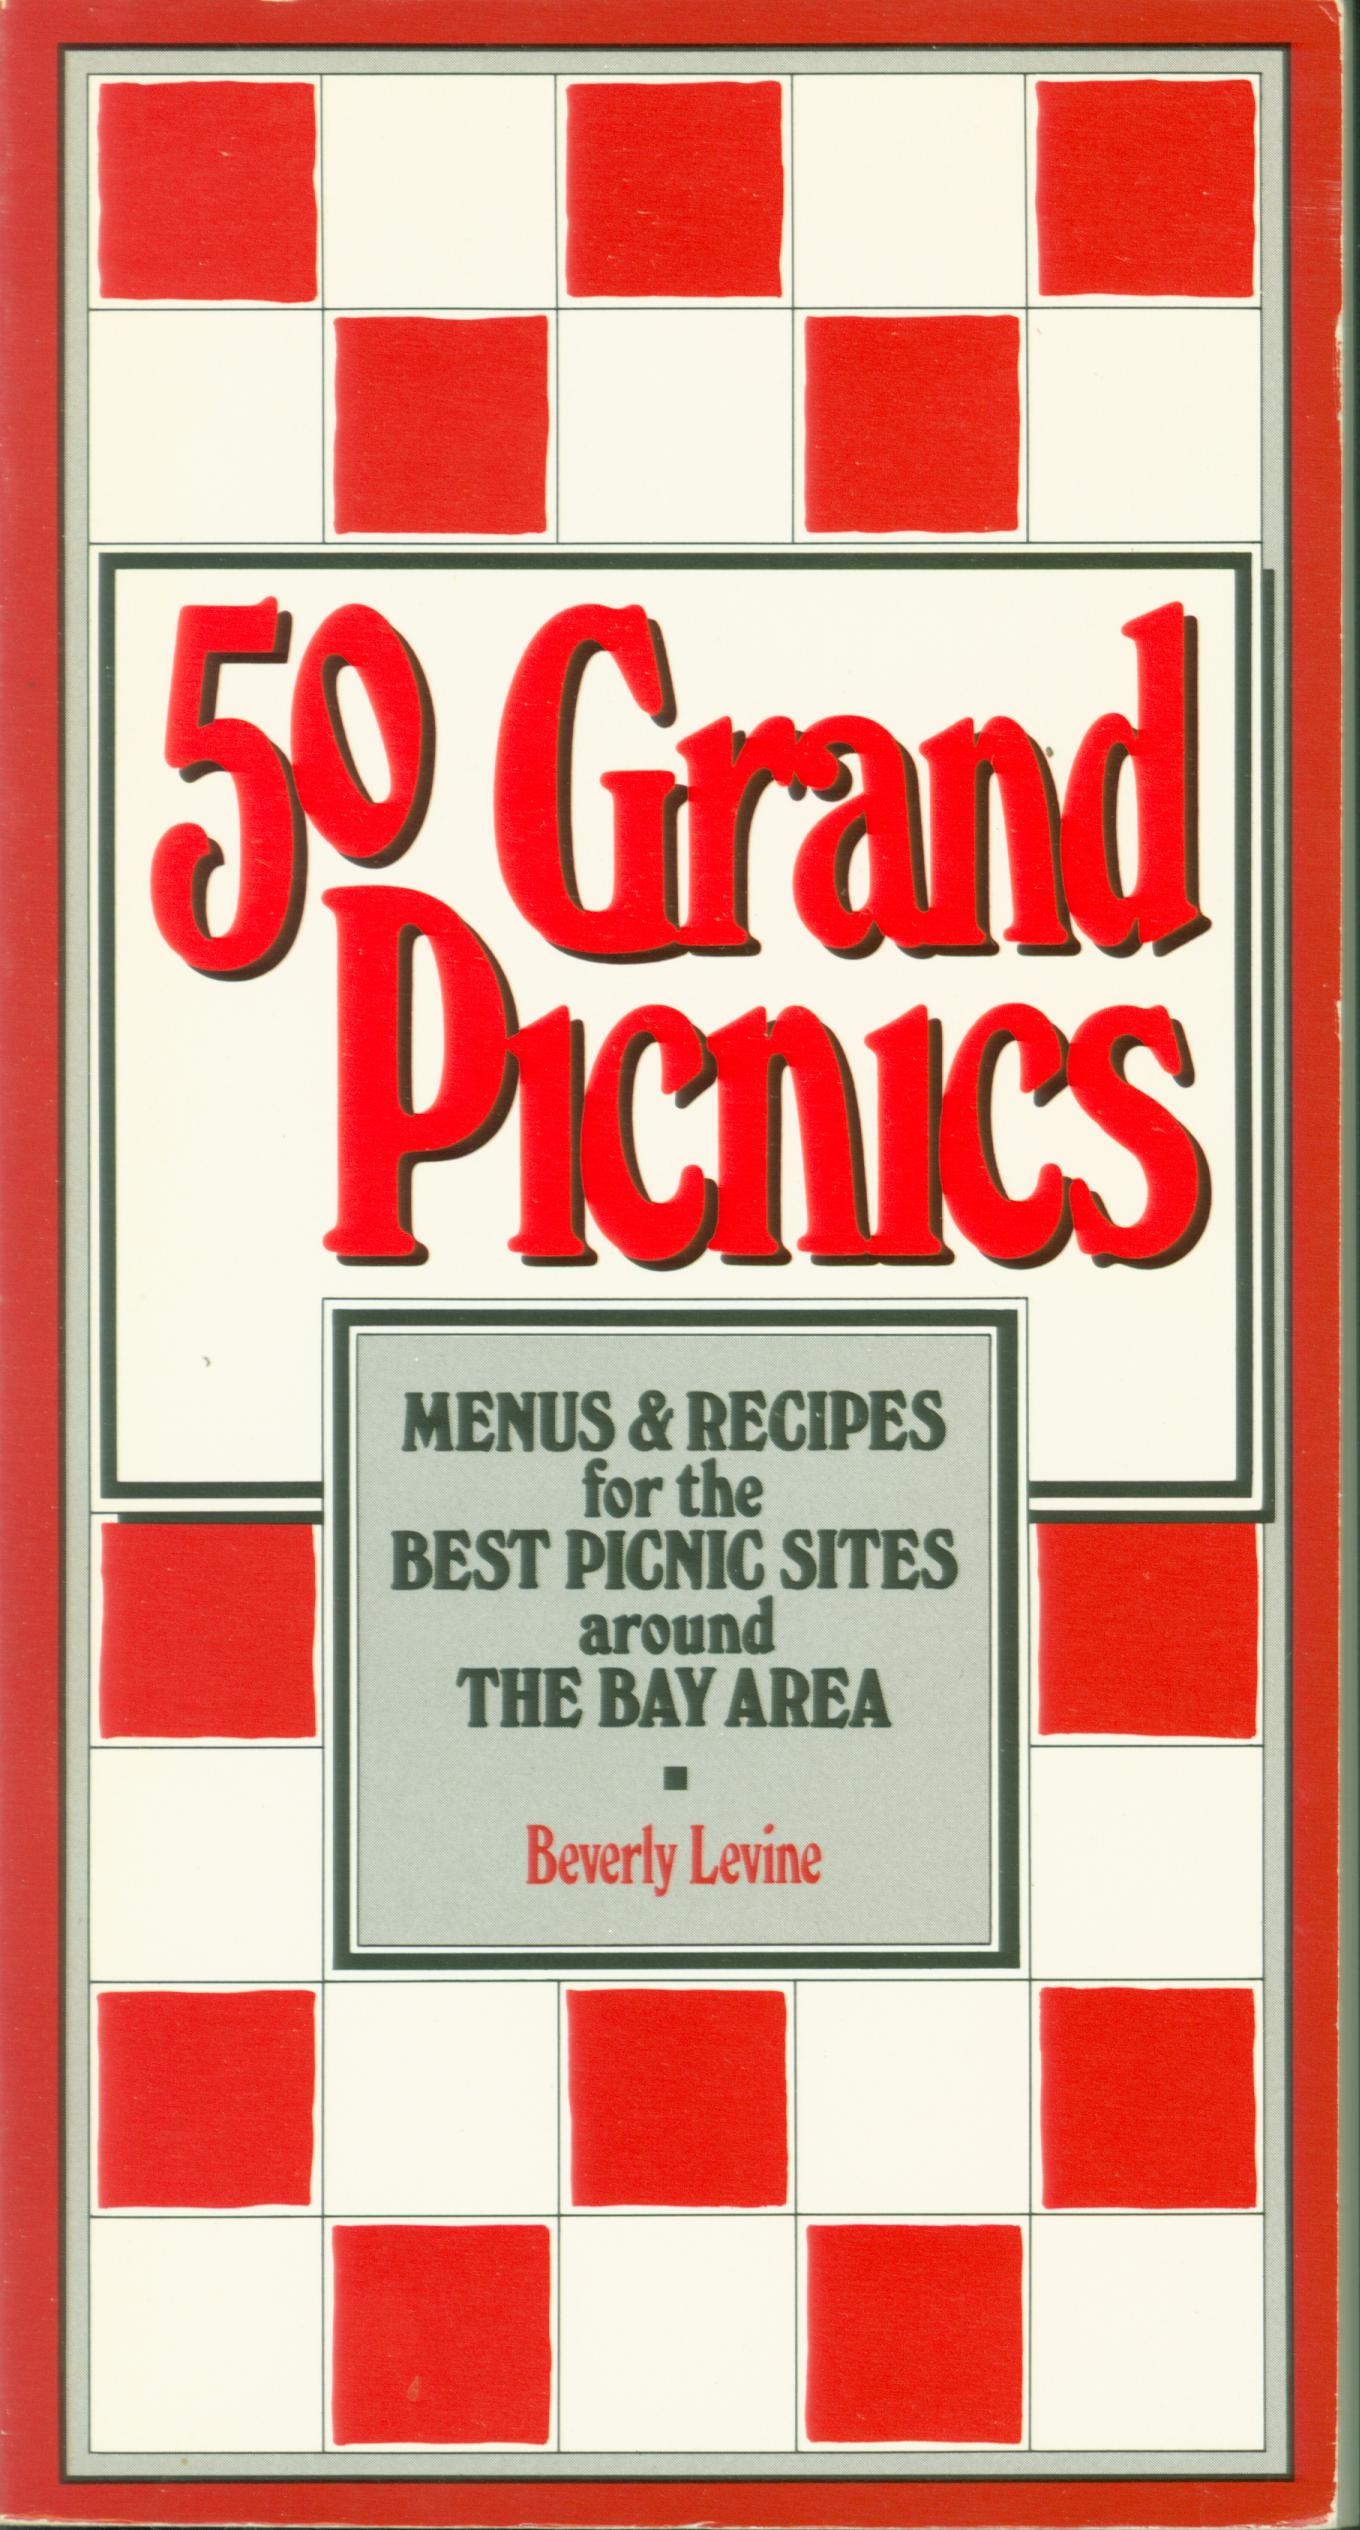 50 GRAND PICNICS: menus & recipes for the best picnic sites around the Bay Area.